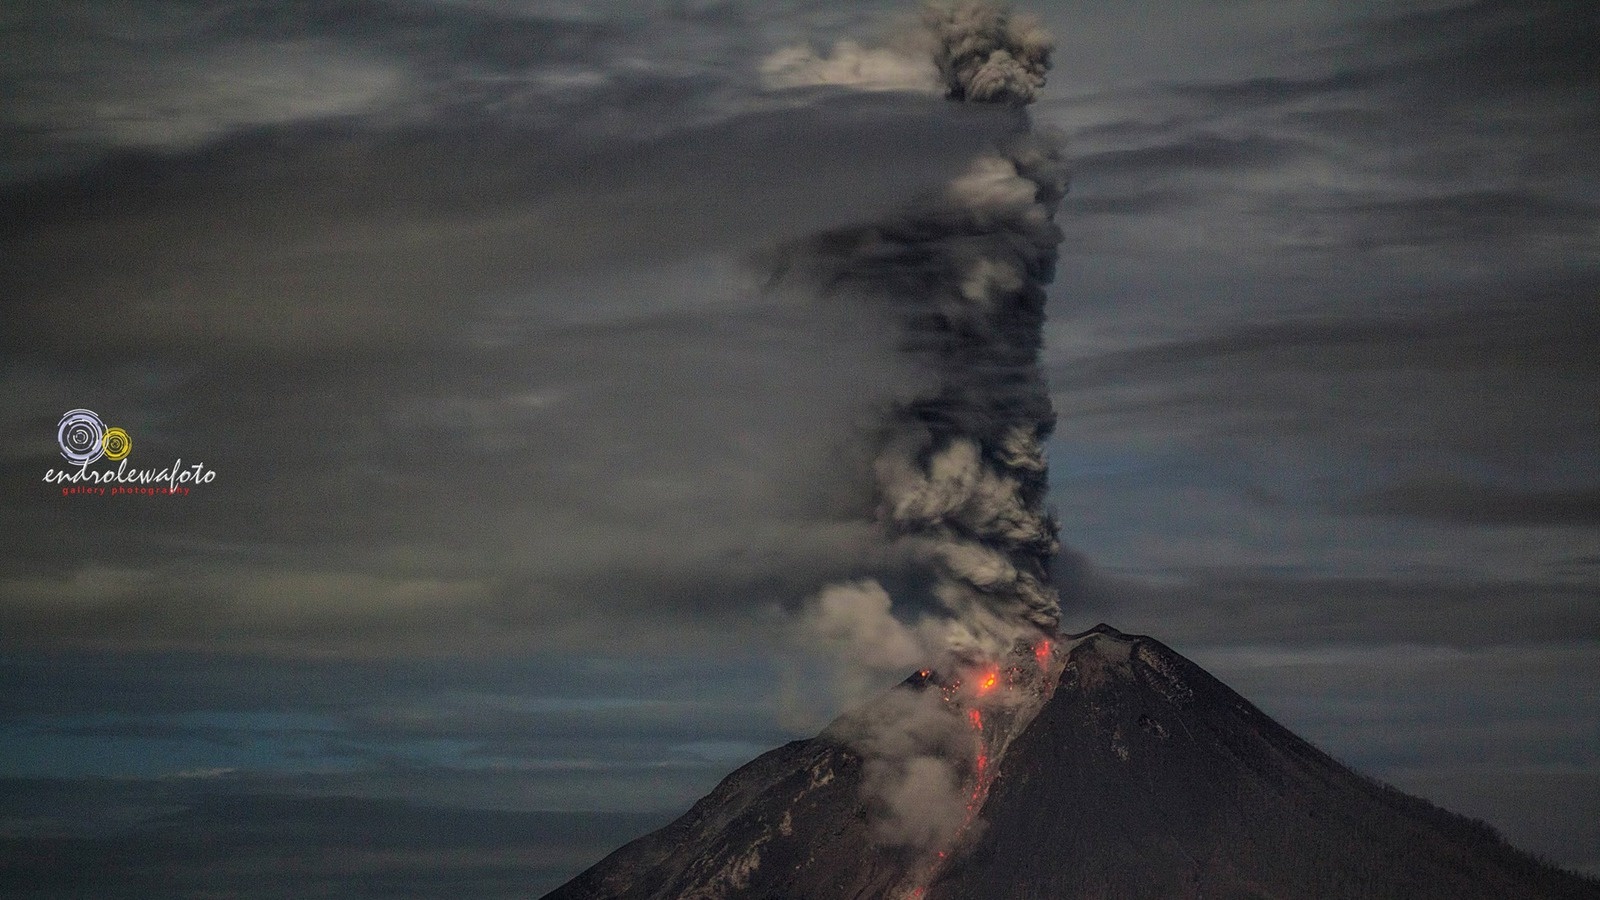 sinabung eruption, volcanic eruption january 2017, latest volcano eruptions, latest volcanic eruption, volcano eruptions worldwide